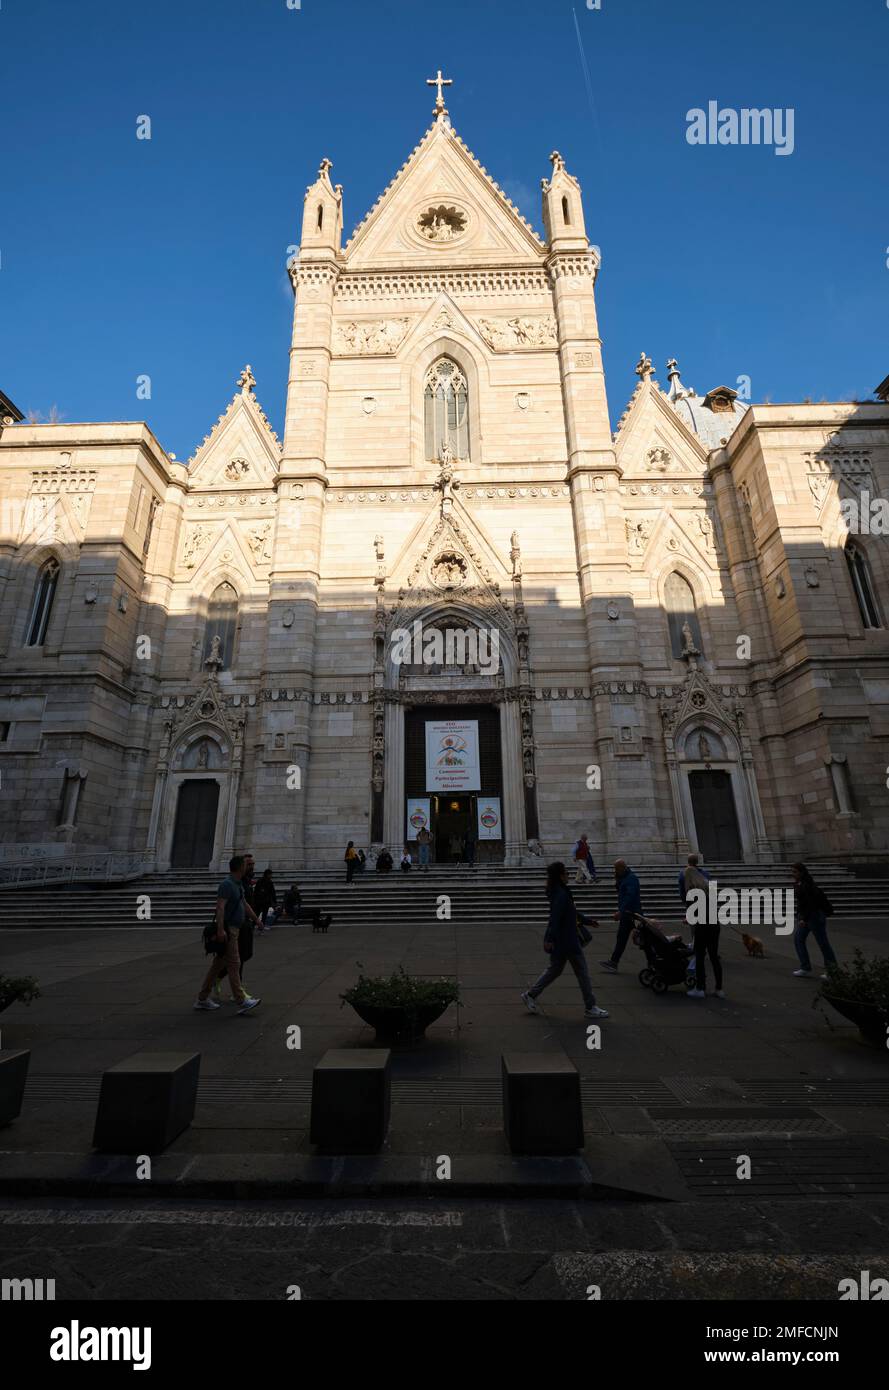 The white marble facade of the Duomo, Cattedrale di Santa Maria Assunta, Catholic church landmark in the Centro Historico neighborhood. In Naples, Nap Stock Photo